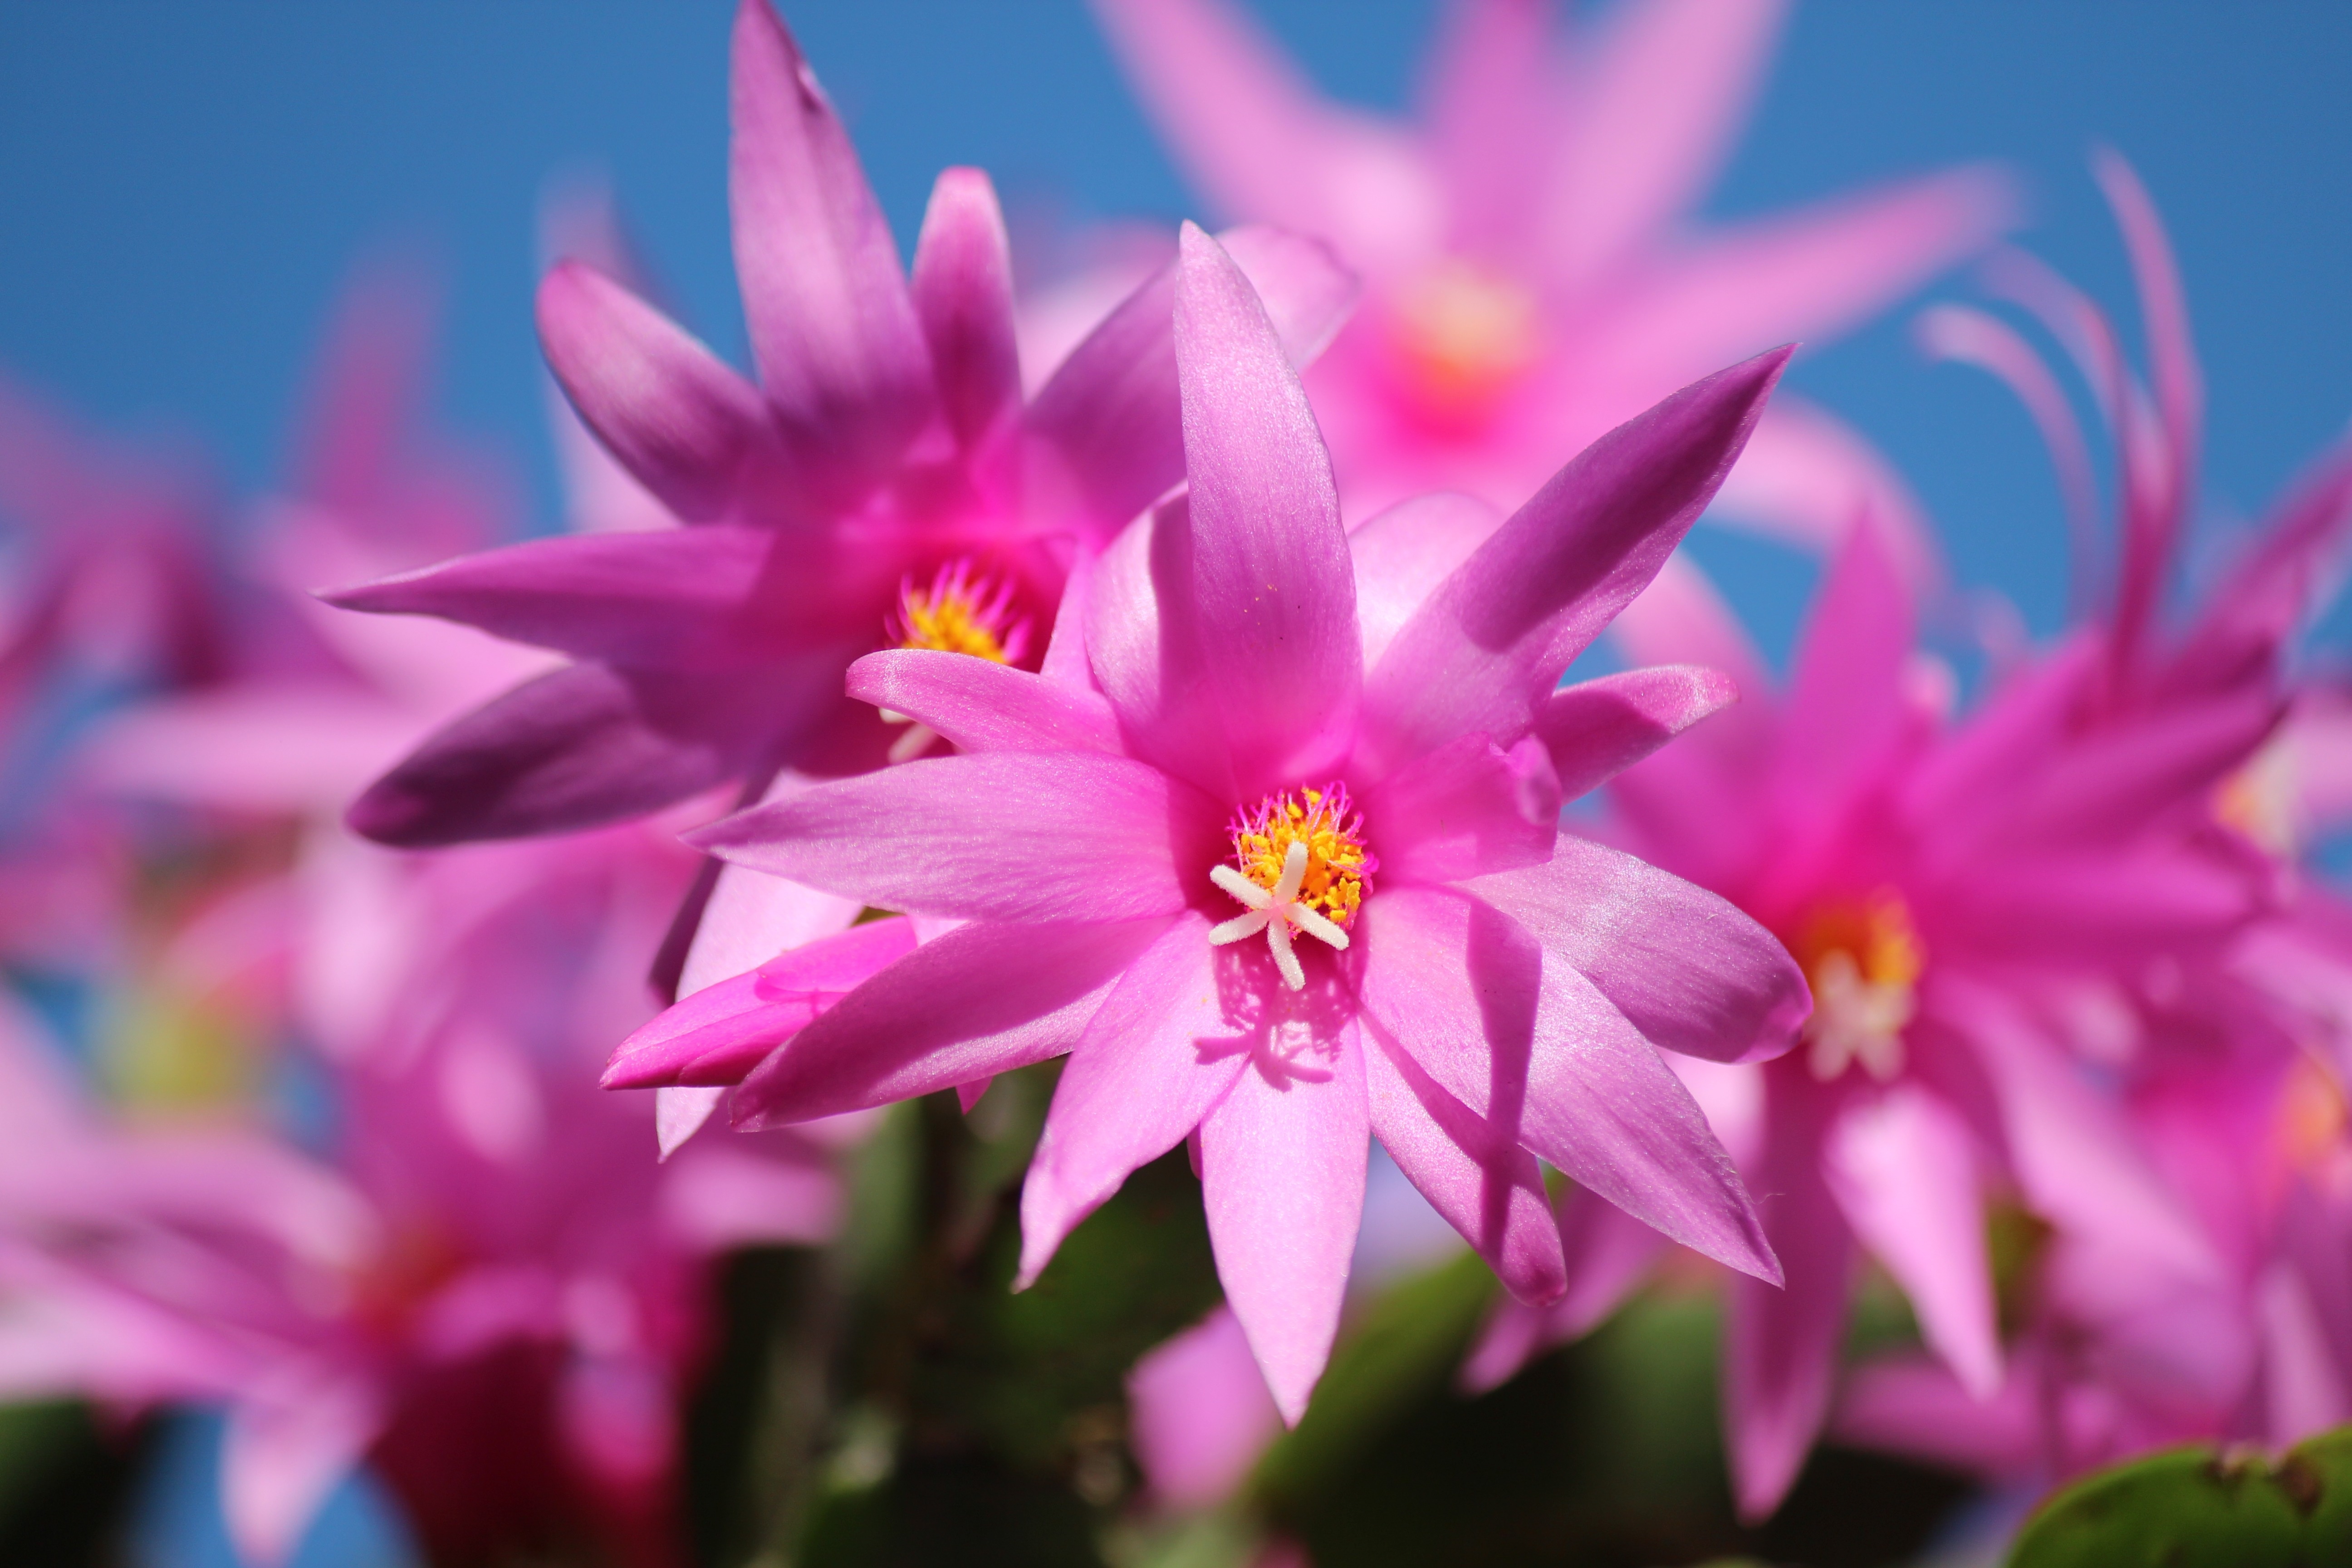 Christmas Cactus, Schlumbergera, Flowers, flower, pink color